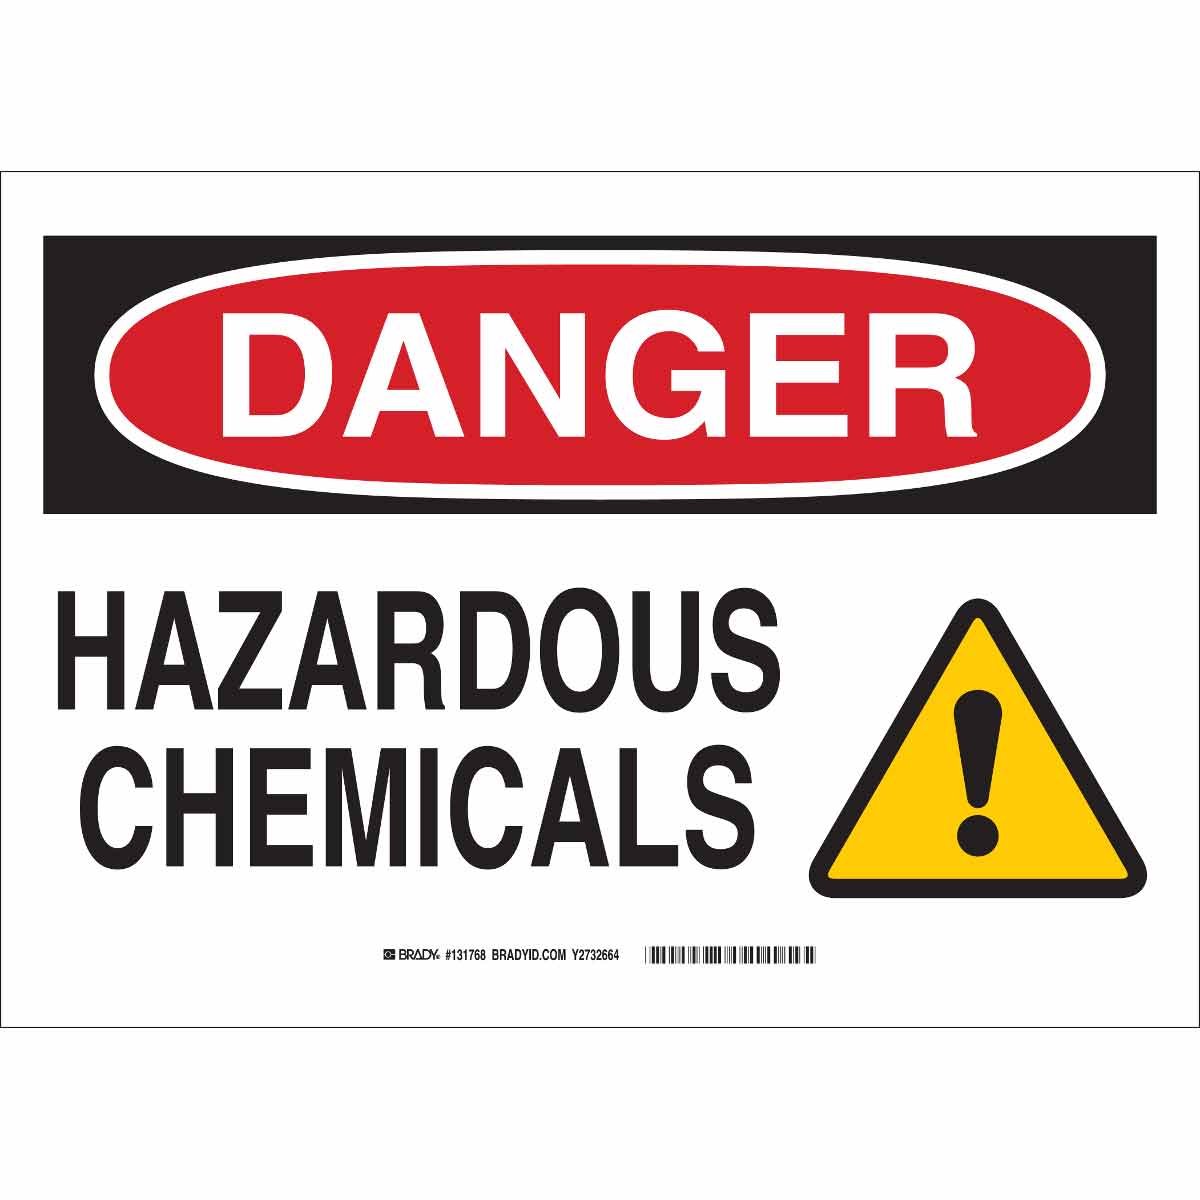 HAZARDOUS CHEMICALS Danger Signs 